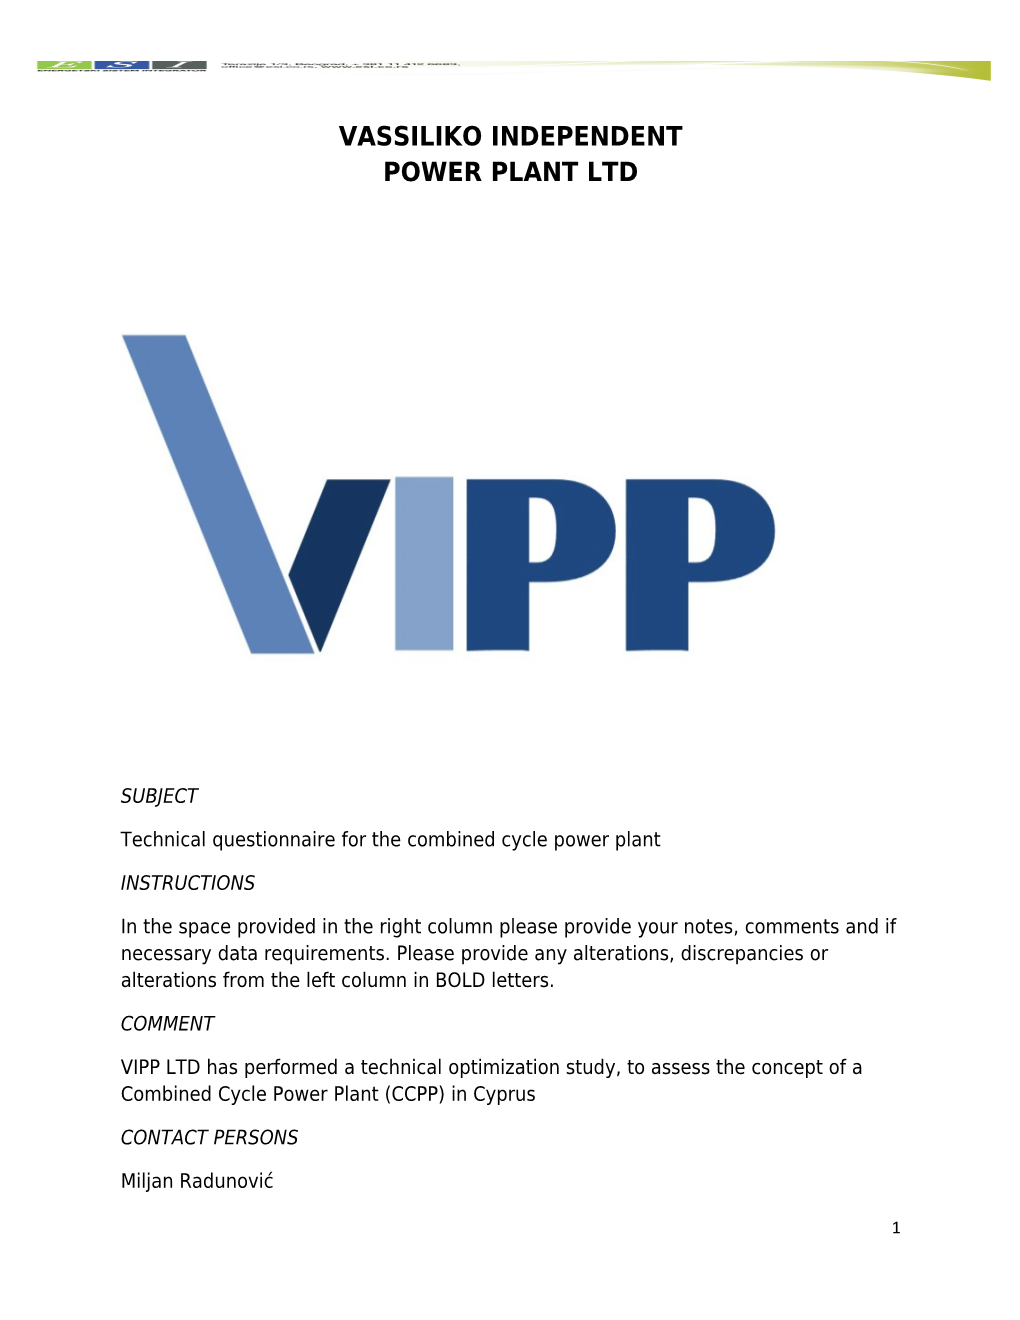 Vassiliko Independent Power Plant Ltd